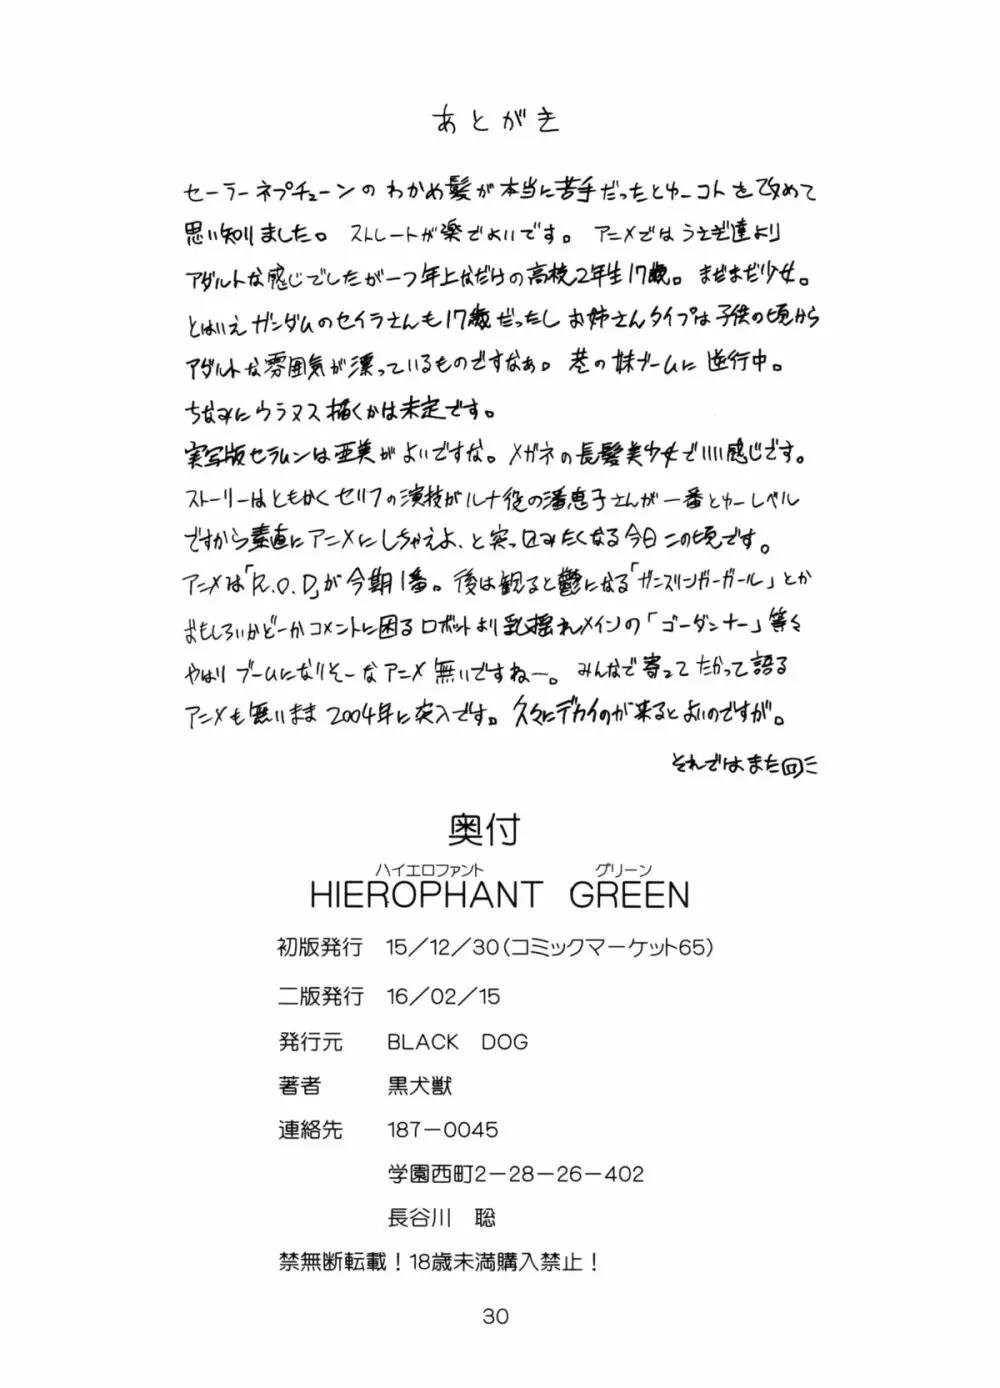 HIEROPHANT GREEN 29ページ